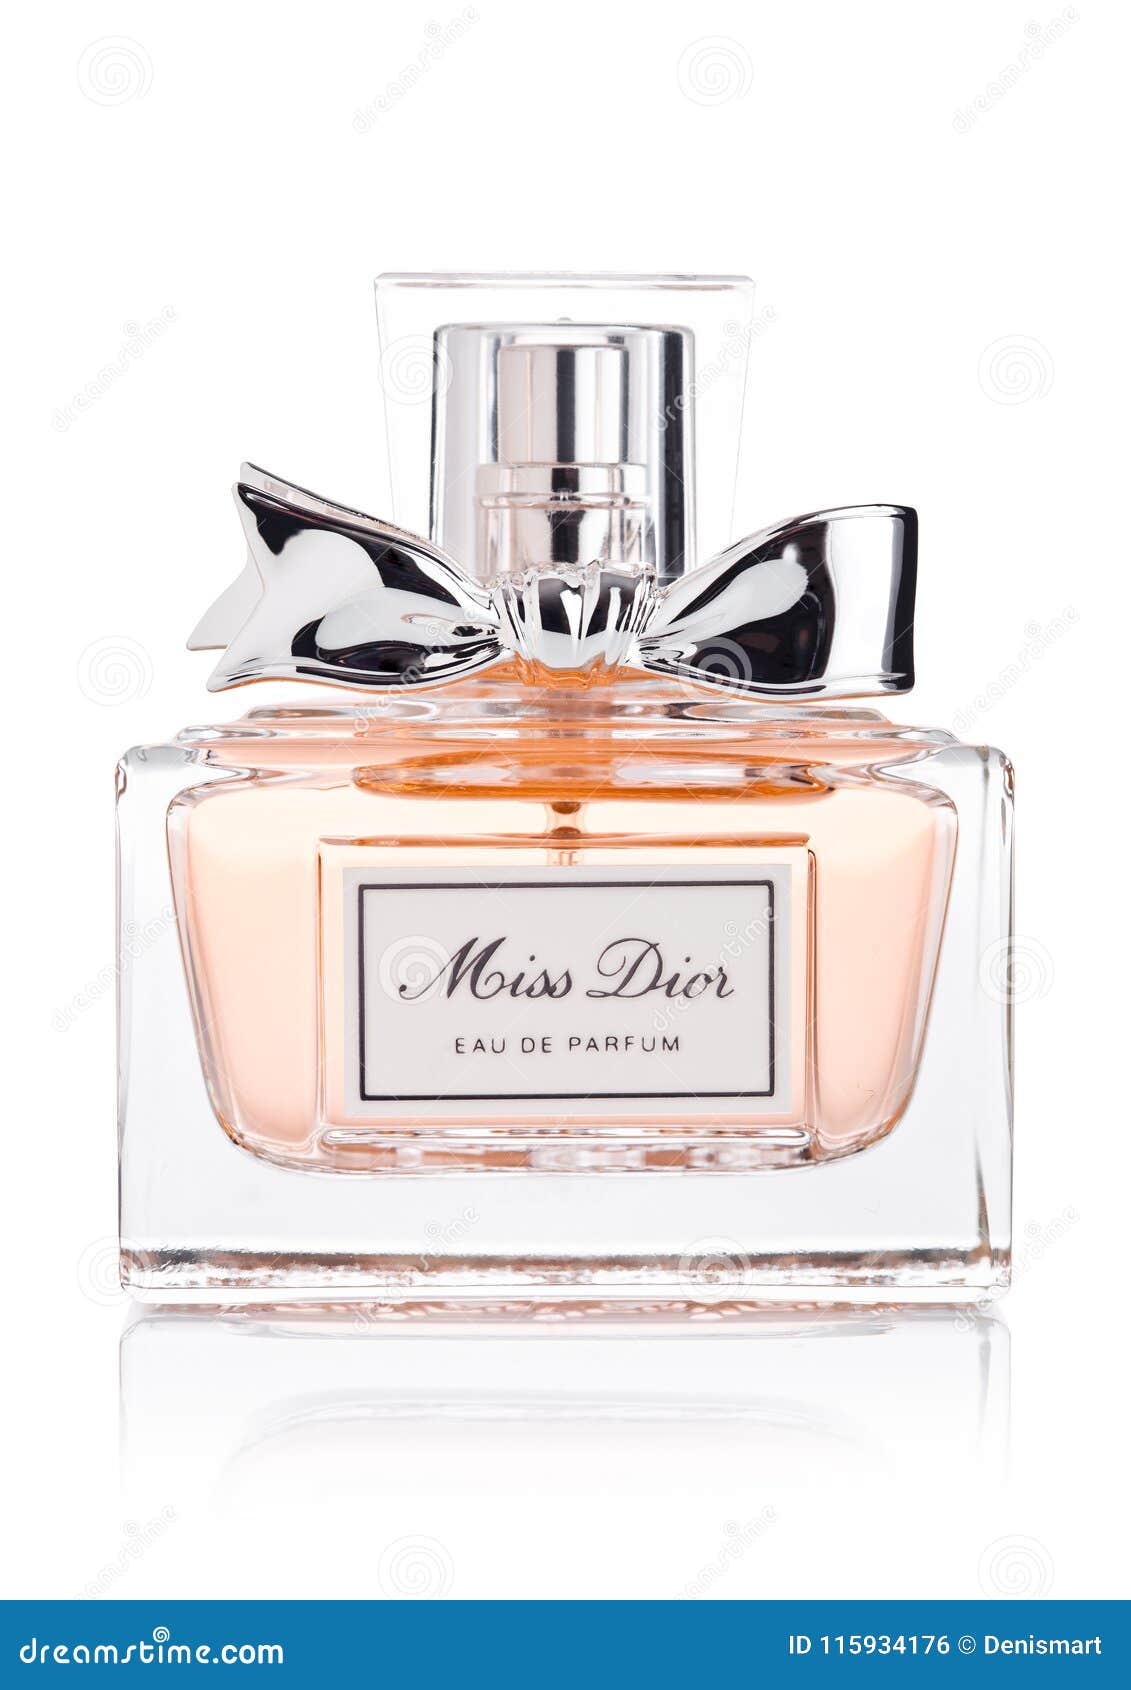 miss dior perfume 2018